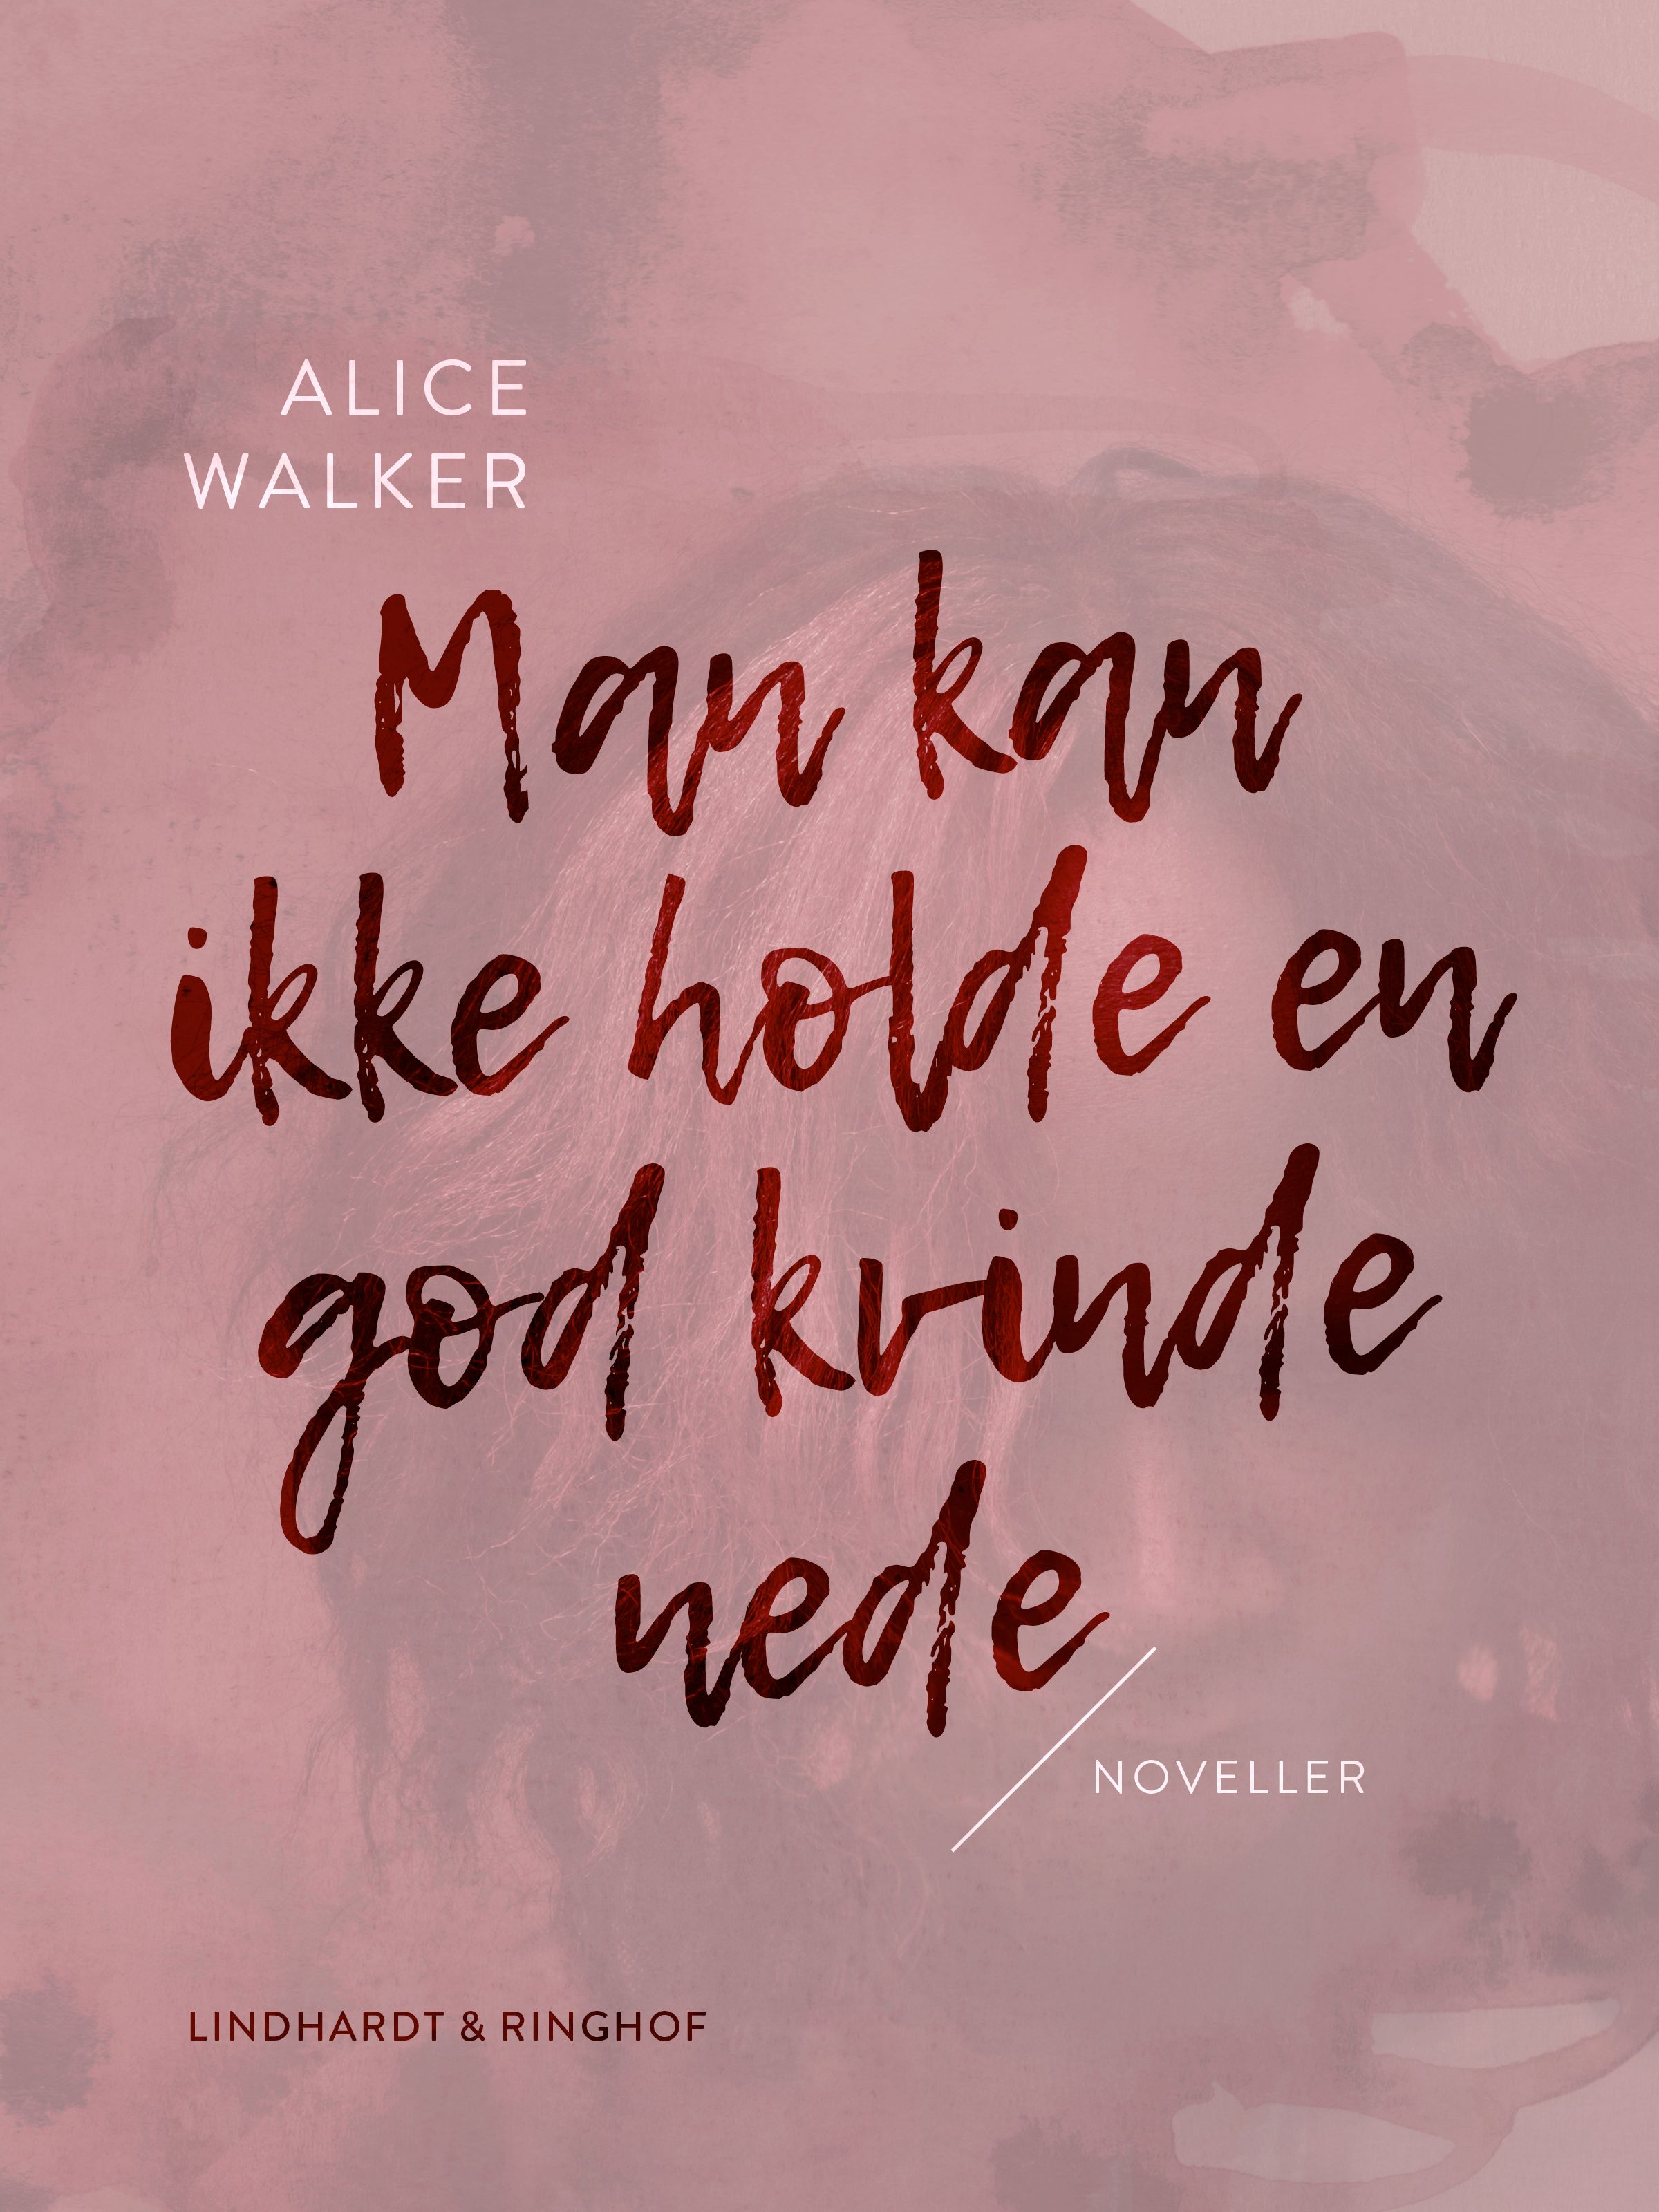 Man kan ikke holde en god kvinde nede, ljudbok av Alice Walker